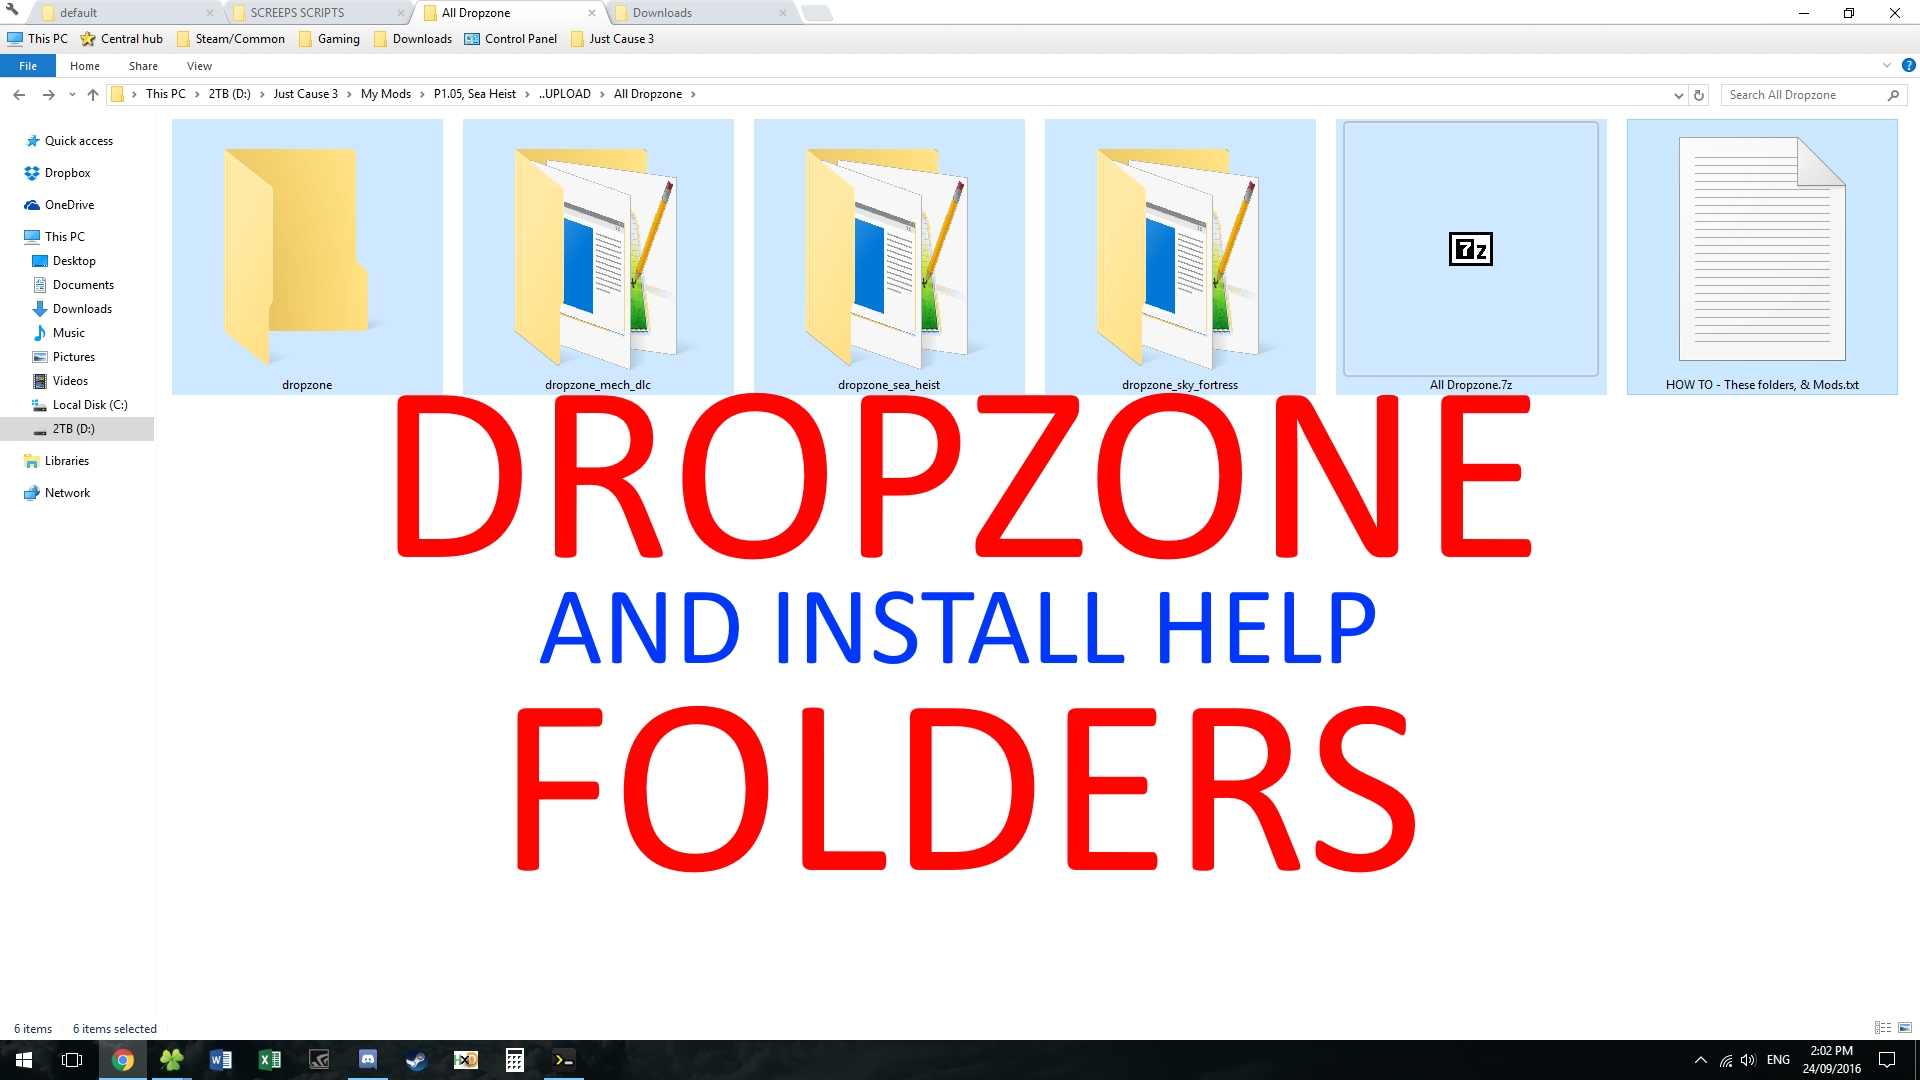 Dropzone folders & Install help